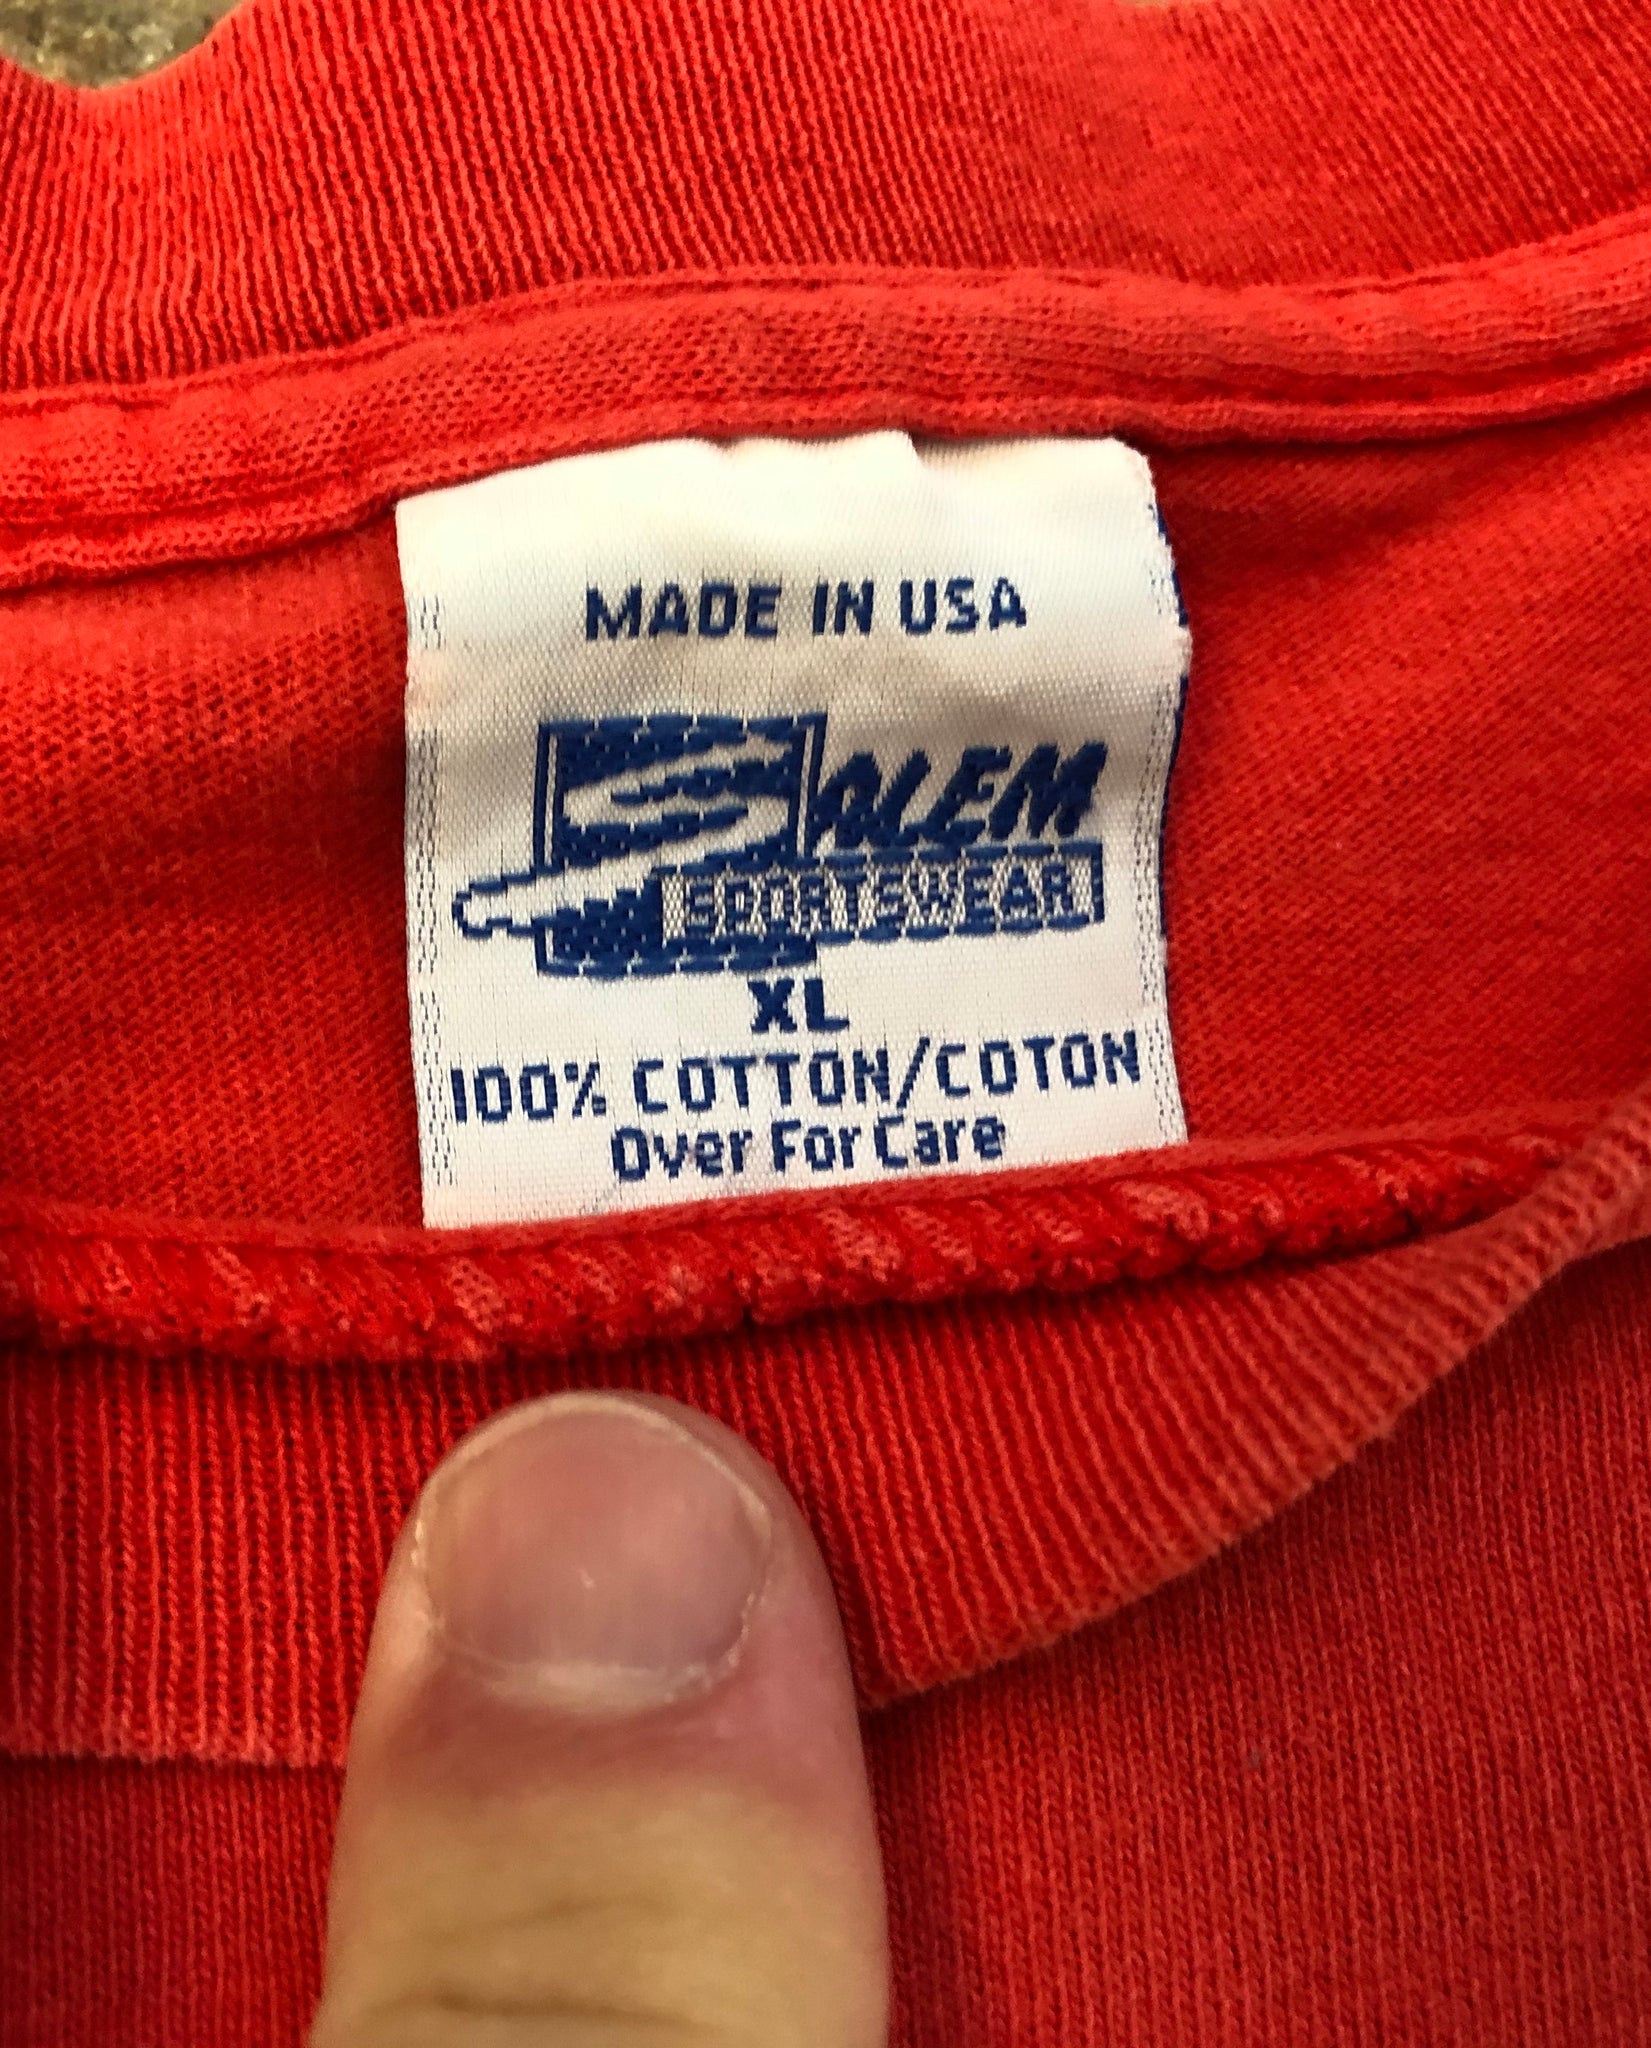 1992 Kansas City Chiefs Salem Sportswear NFL T Shirt Size Large